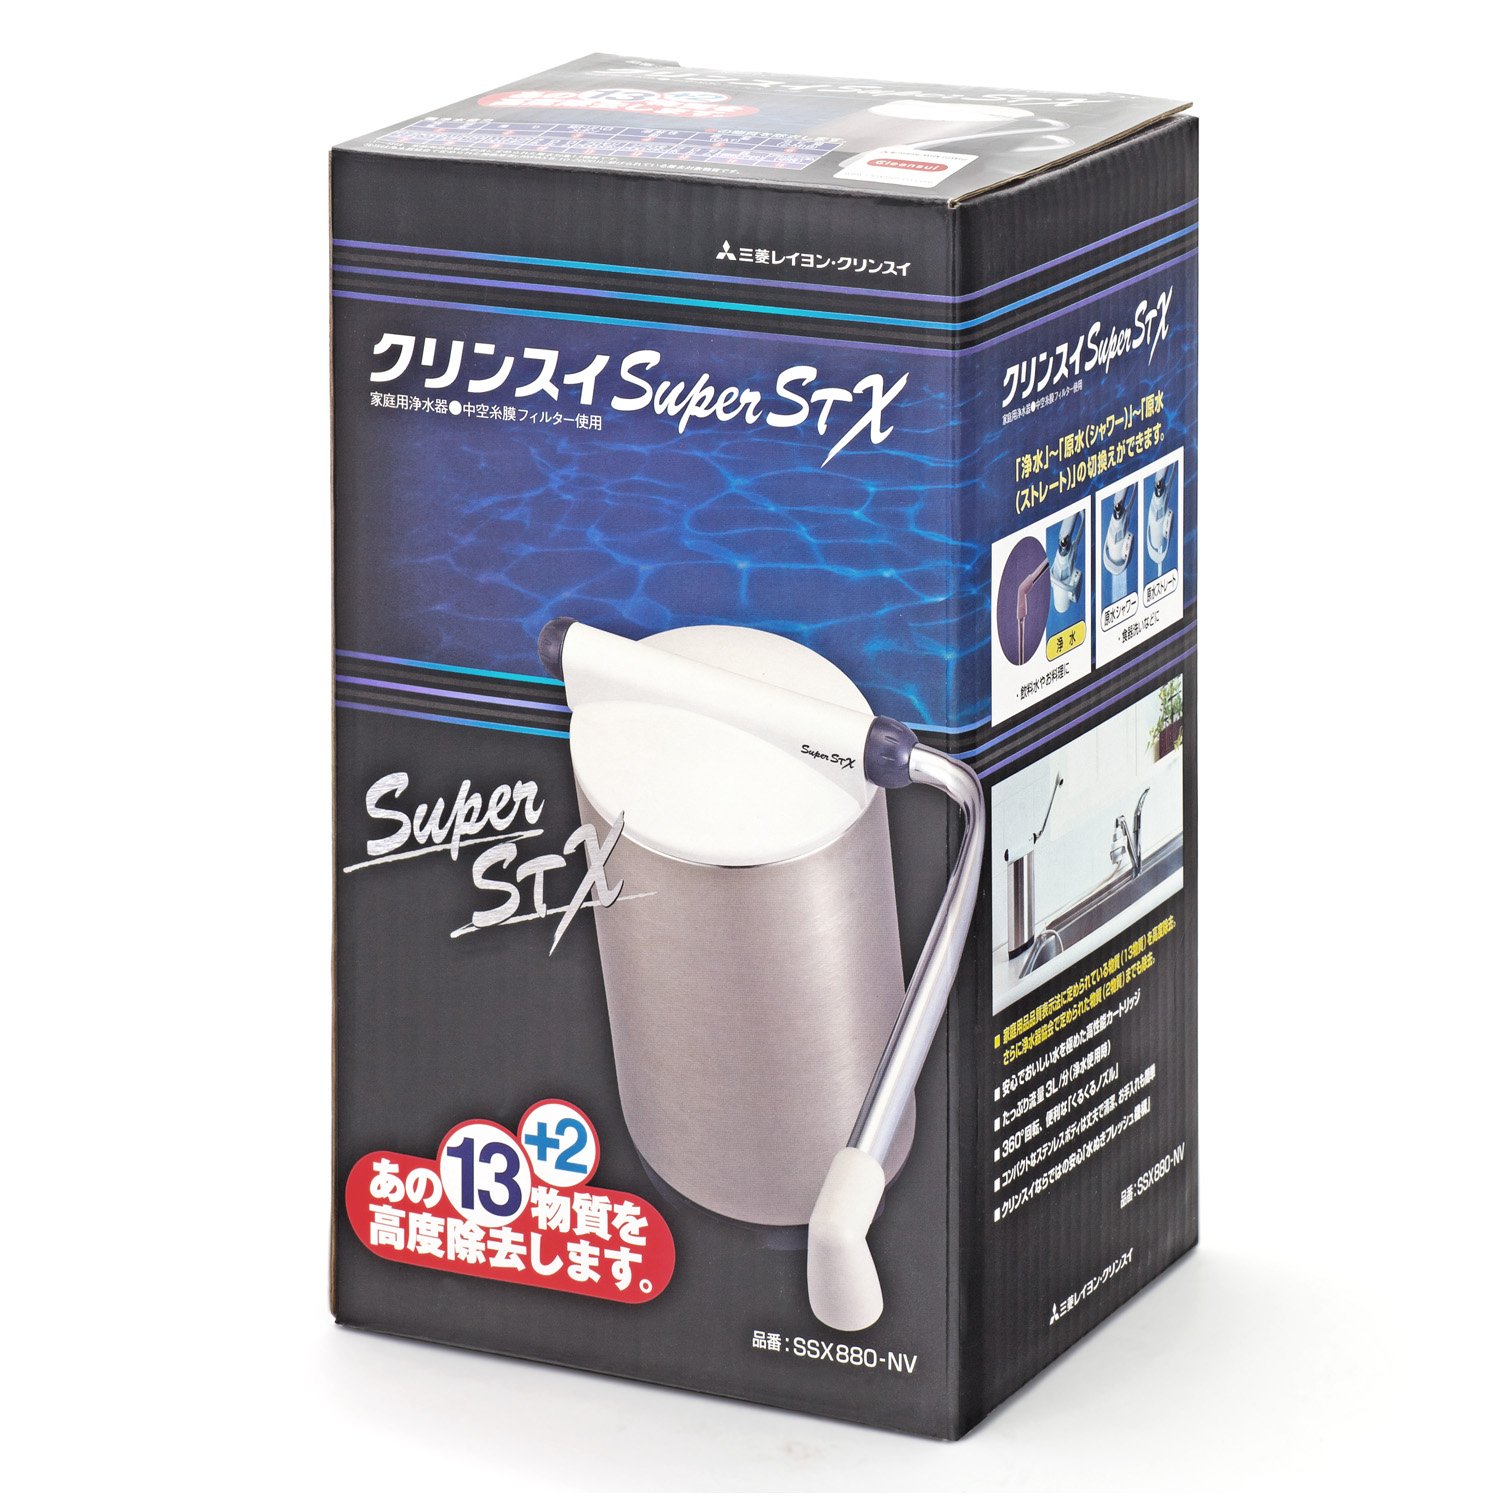 Mua CLEANSUI Super STX SSX880-NV-stationary water purifiers CLEANSUI Rayon  (Japan import) trên Amazon Mỹ chính hãng 2023 Giaonhan247